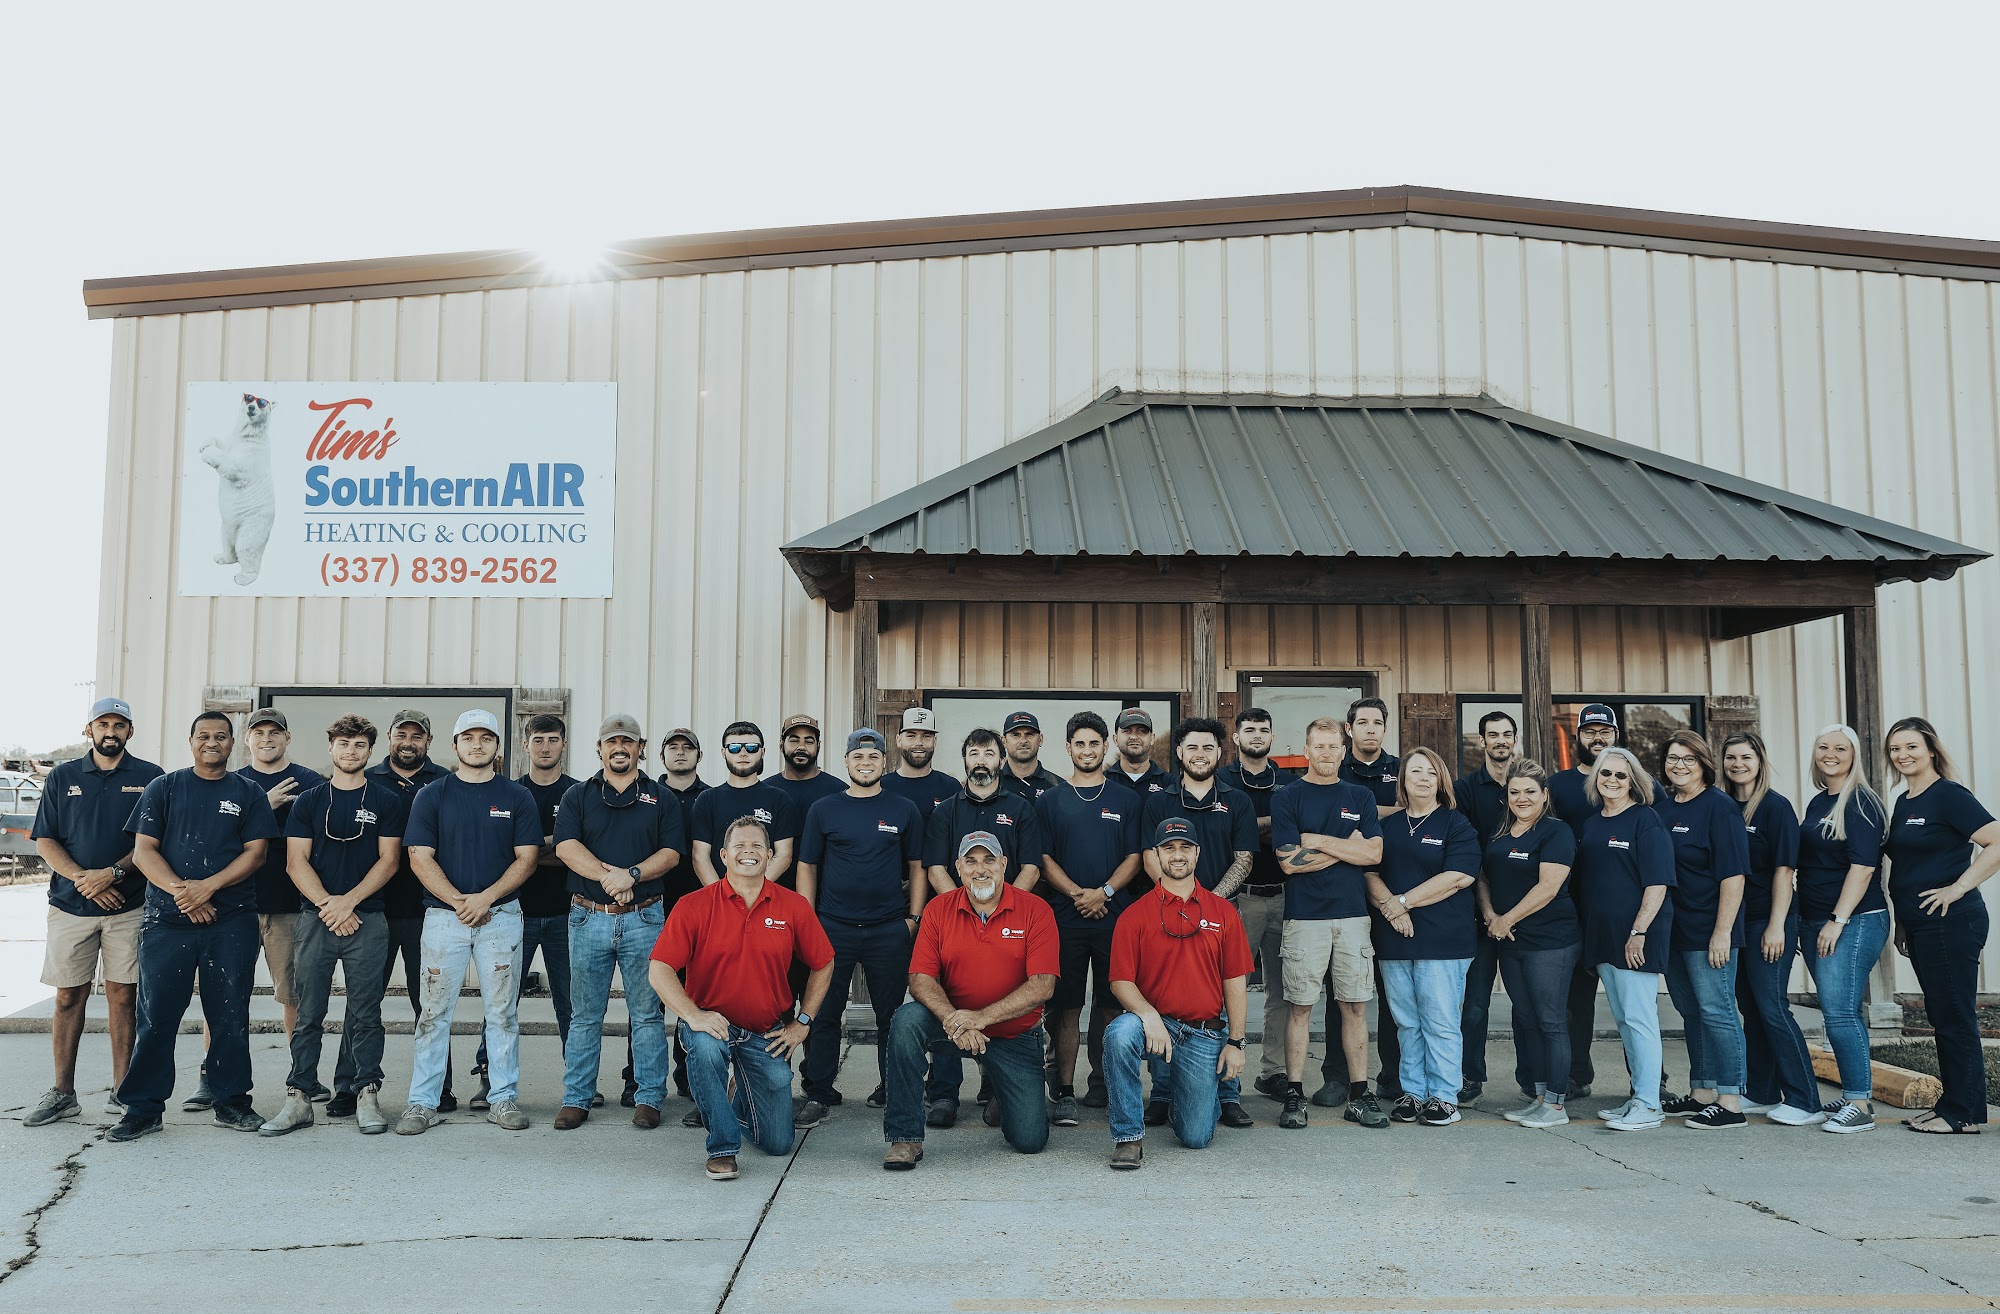 Tim's Southern Air Heating, Cooling & Plumbing